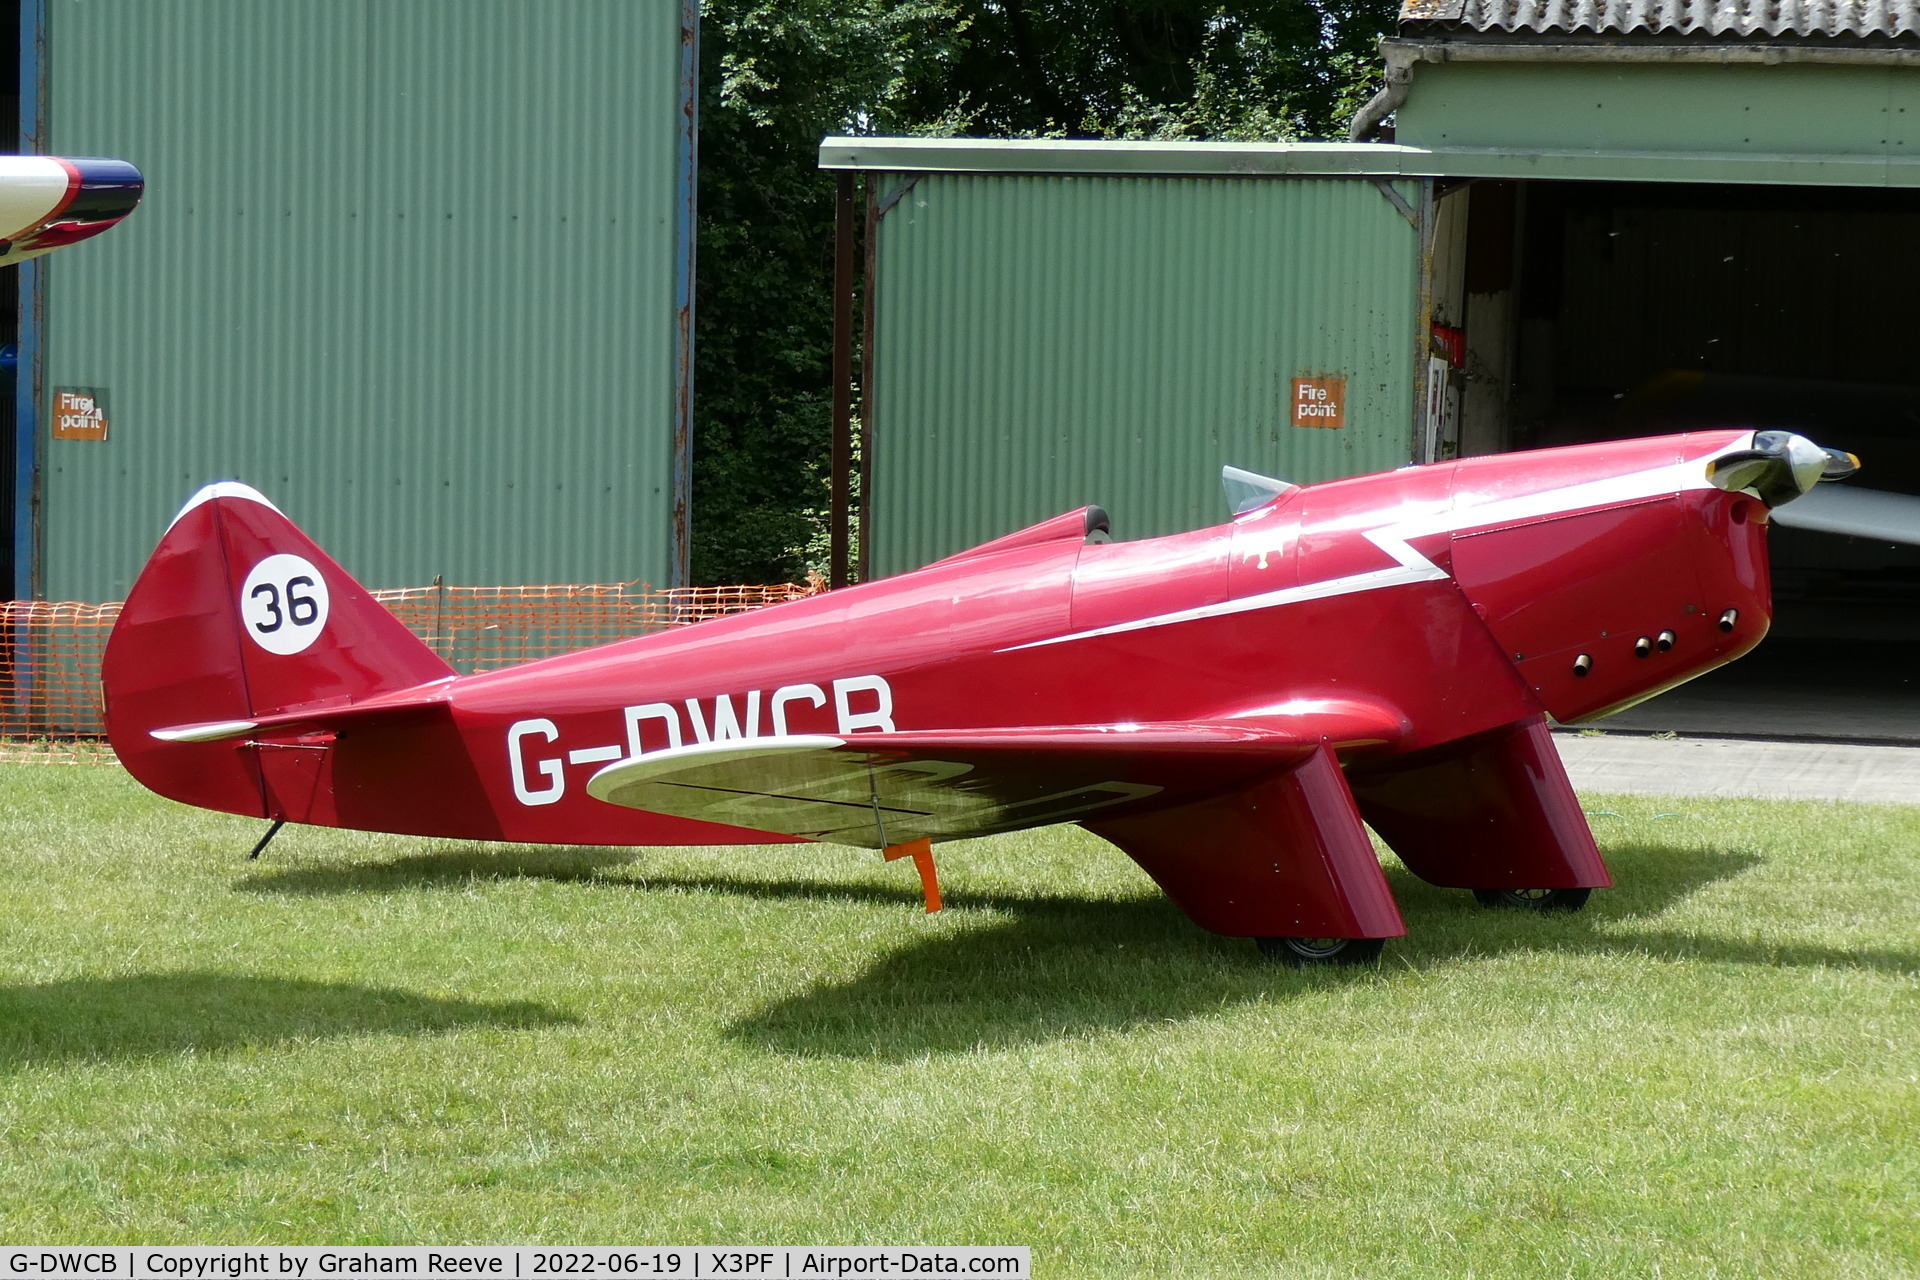 G-DWCB, 2015 Chilton DW1A C/N PFA 225-14454, Parked at Priory Farm.